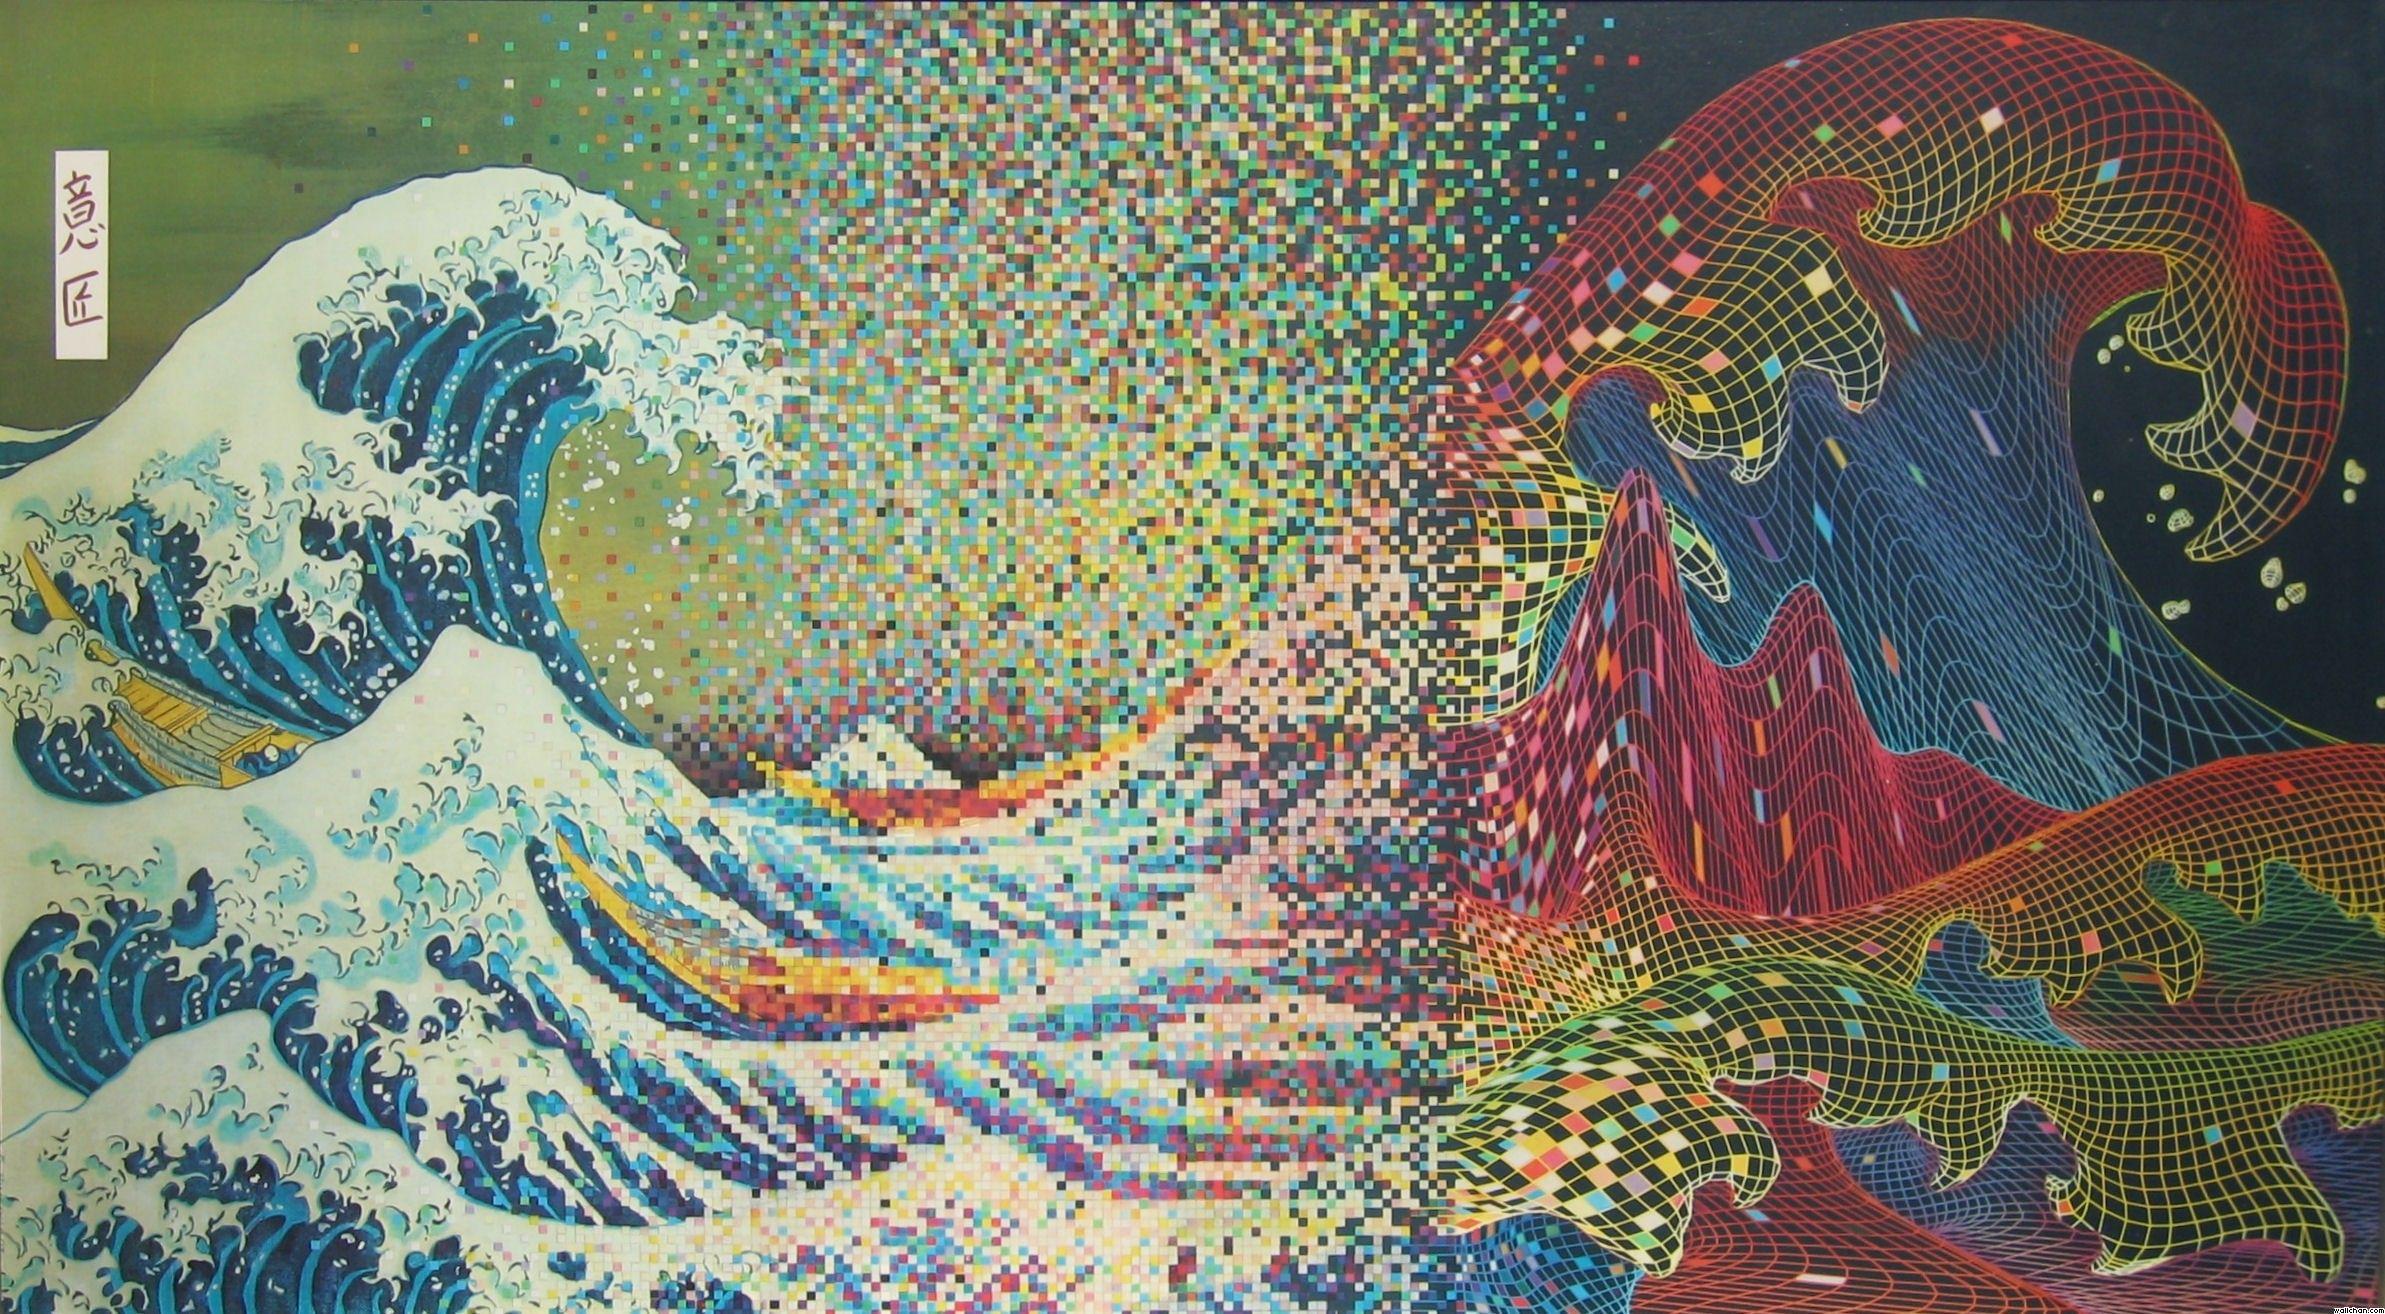 waves, vectors, rainbows, artwork, pixelated, The Great Wave off Kanagawa, sea wallpaper